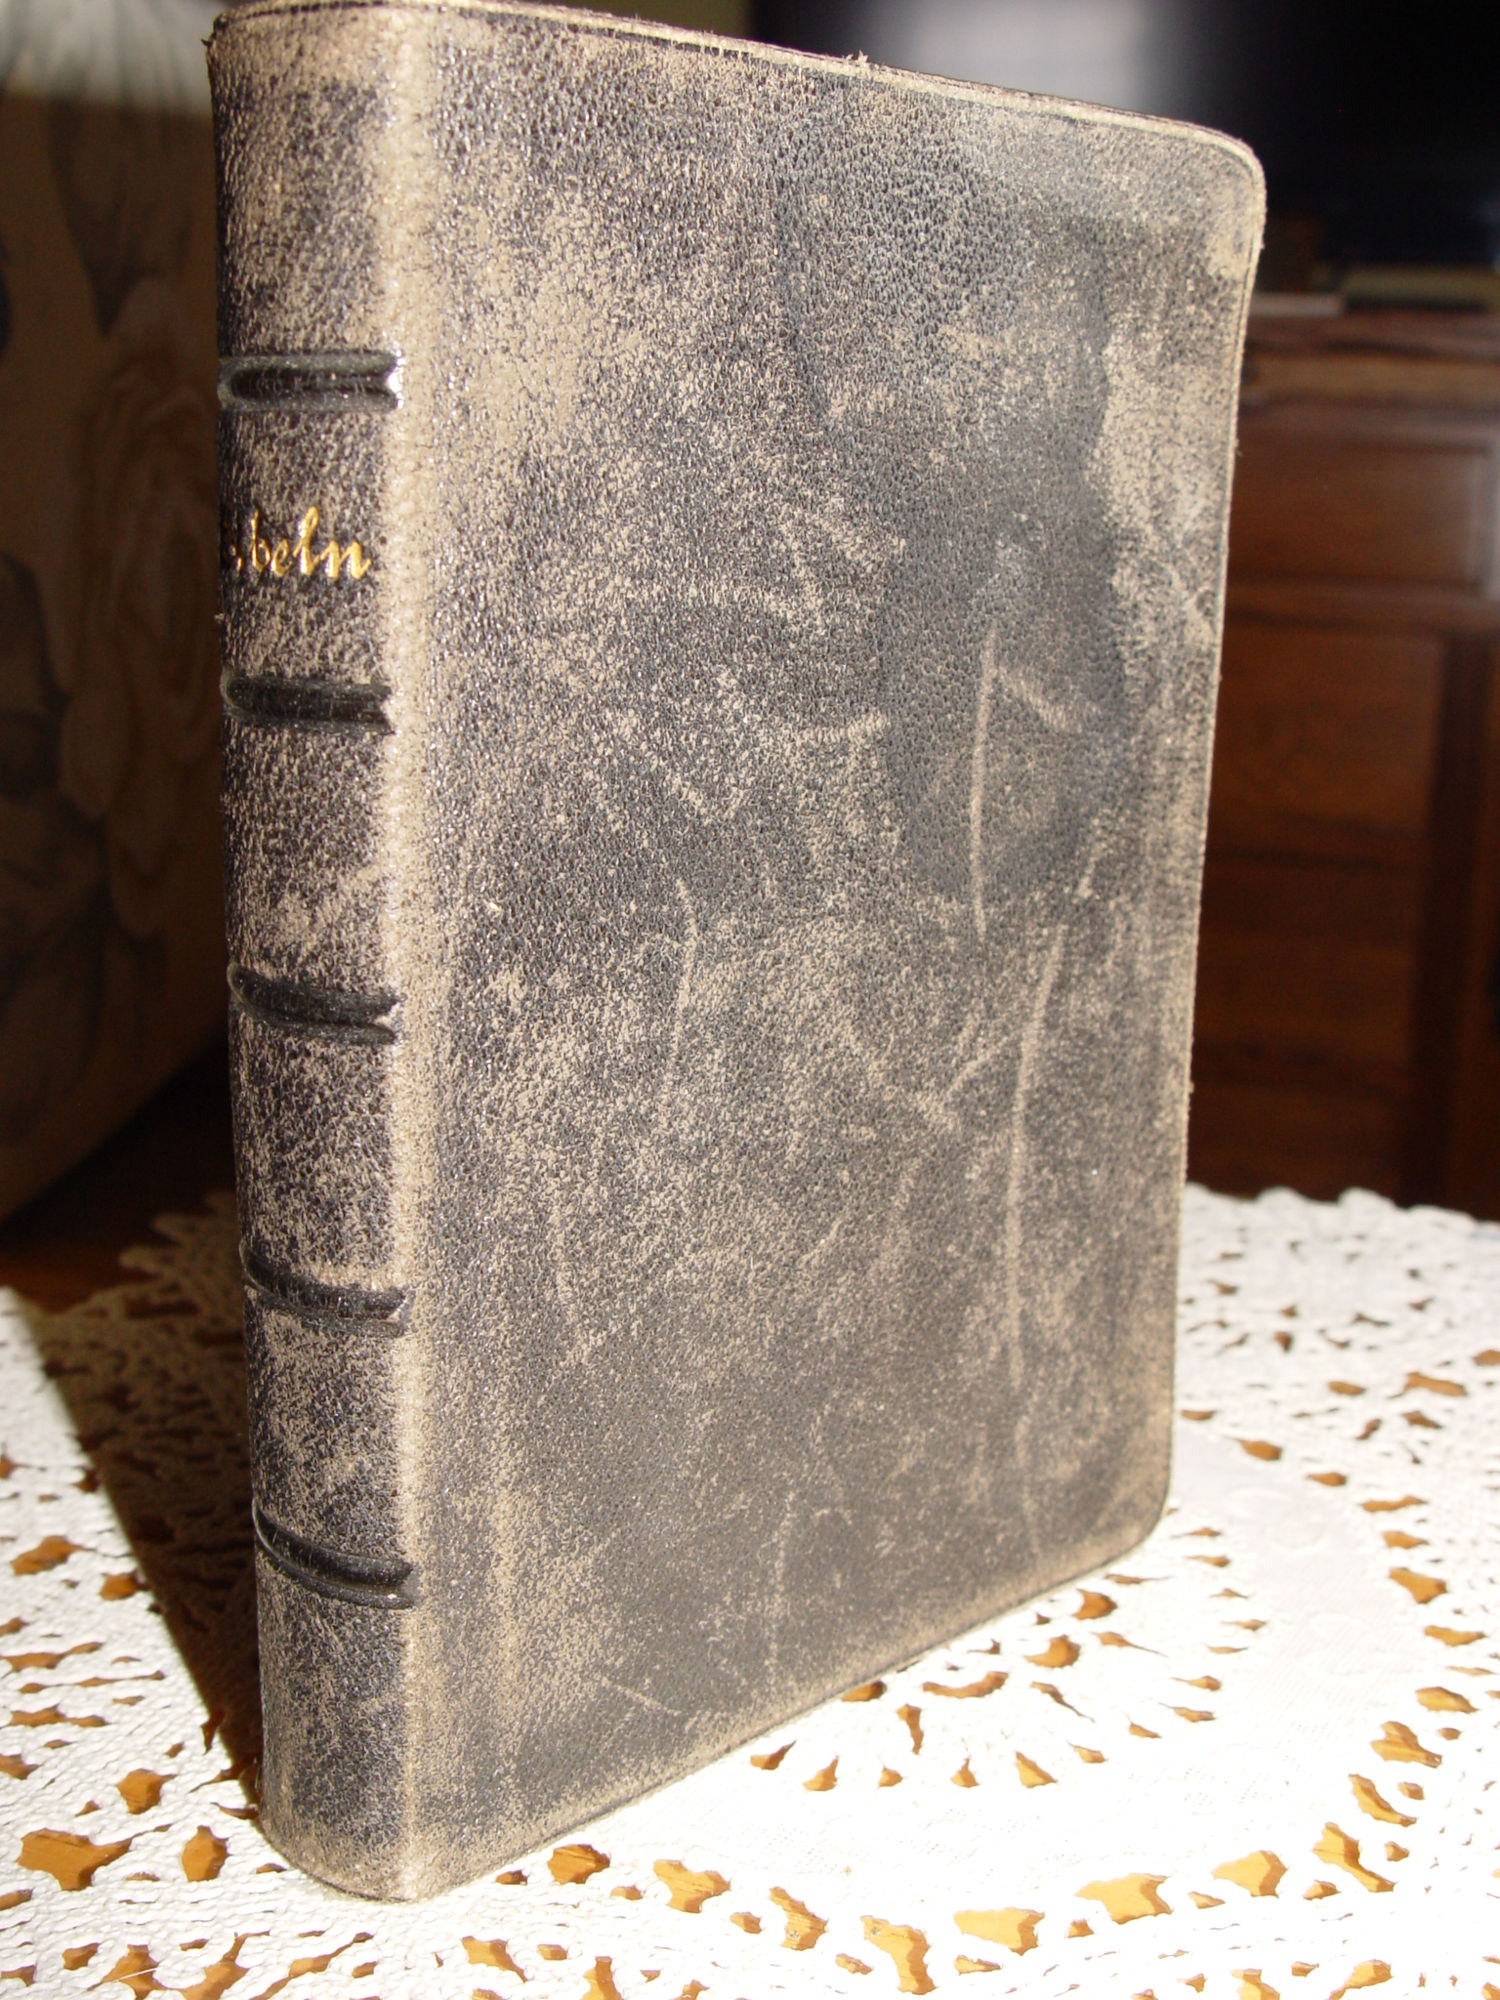 1905 Leather
                        Bible; Bibeln eller Den Heliga Skrift;
                        Stockholm